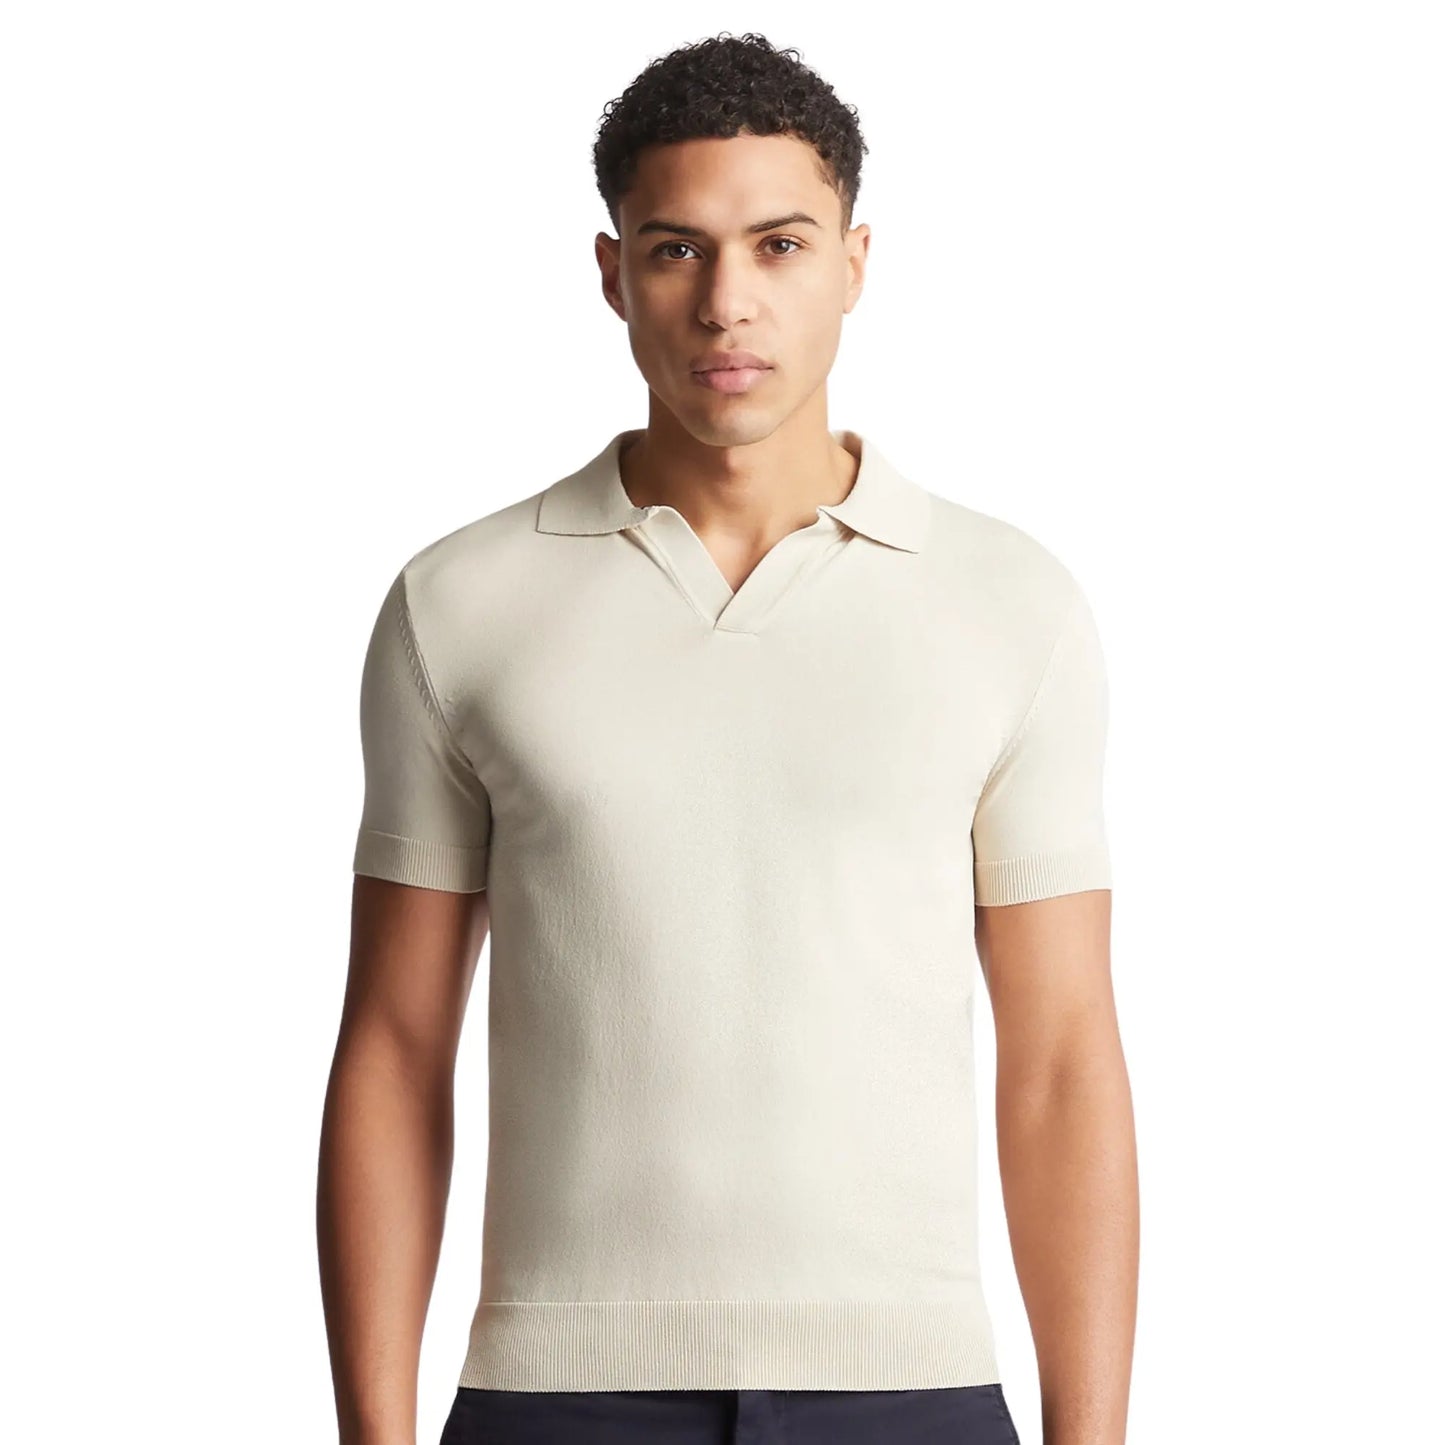 Buy Remus Uomo Short Sleeve Polo Shirt - Cream | Short-Sleeved Polo Shirtss at Woven Durham